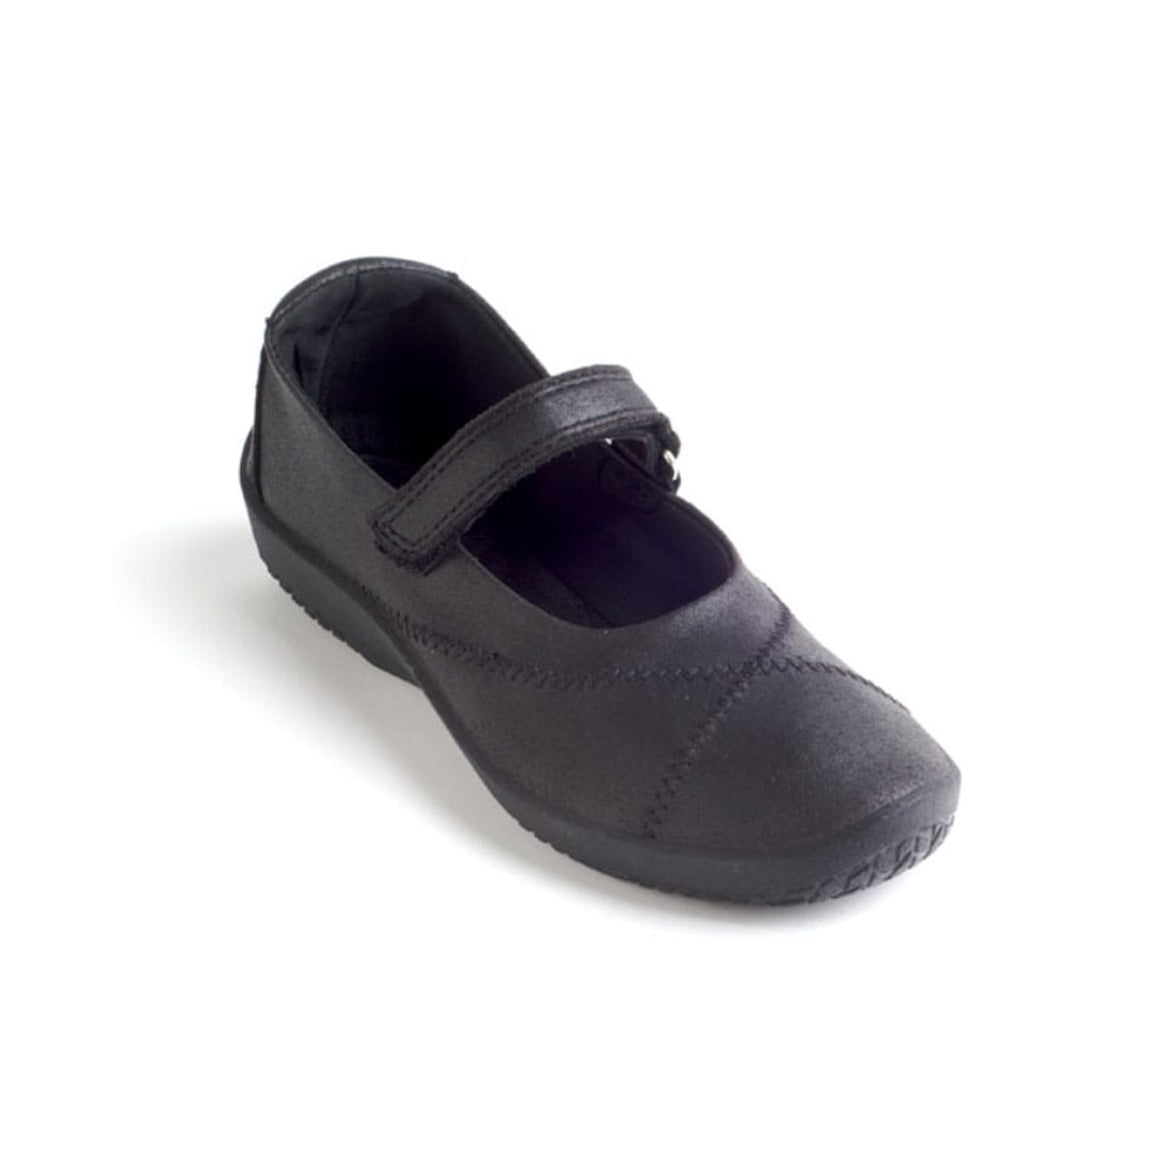 Arcopedico Women's L18 Mary Jane Shoe - Black 4271-01